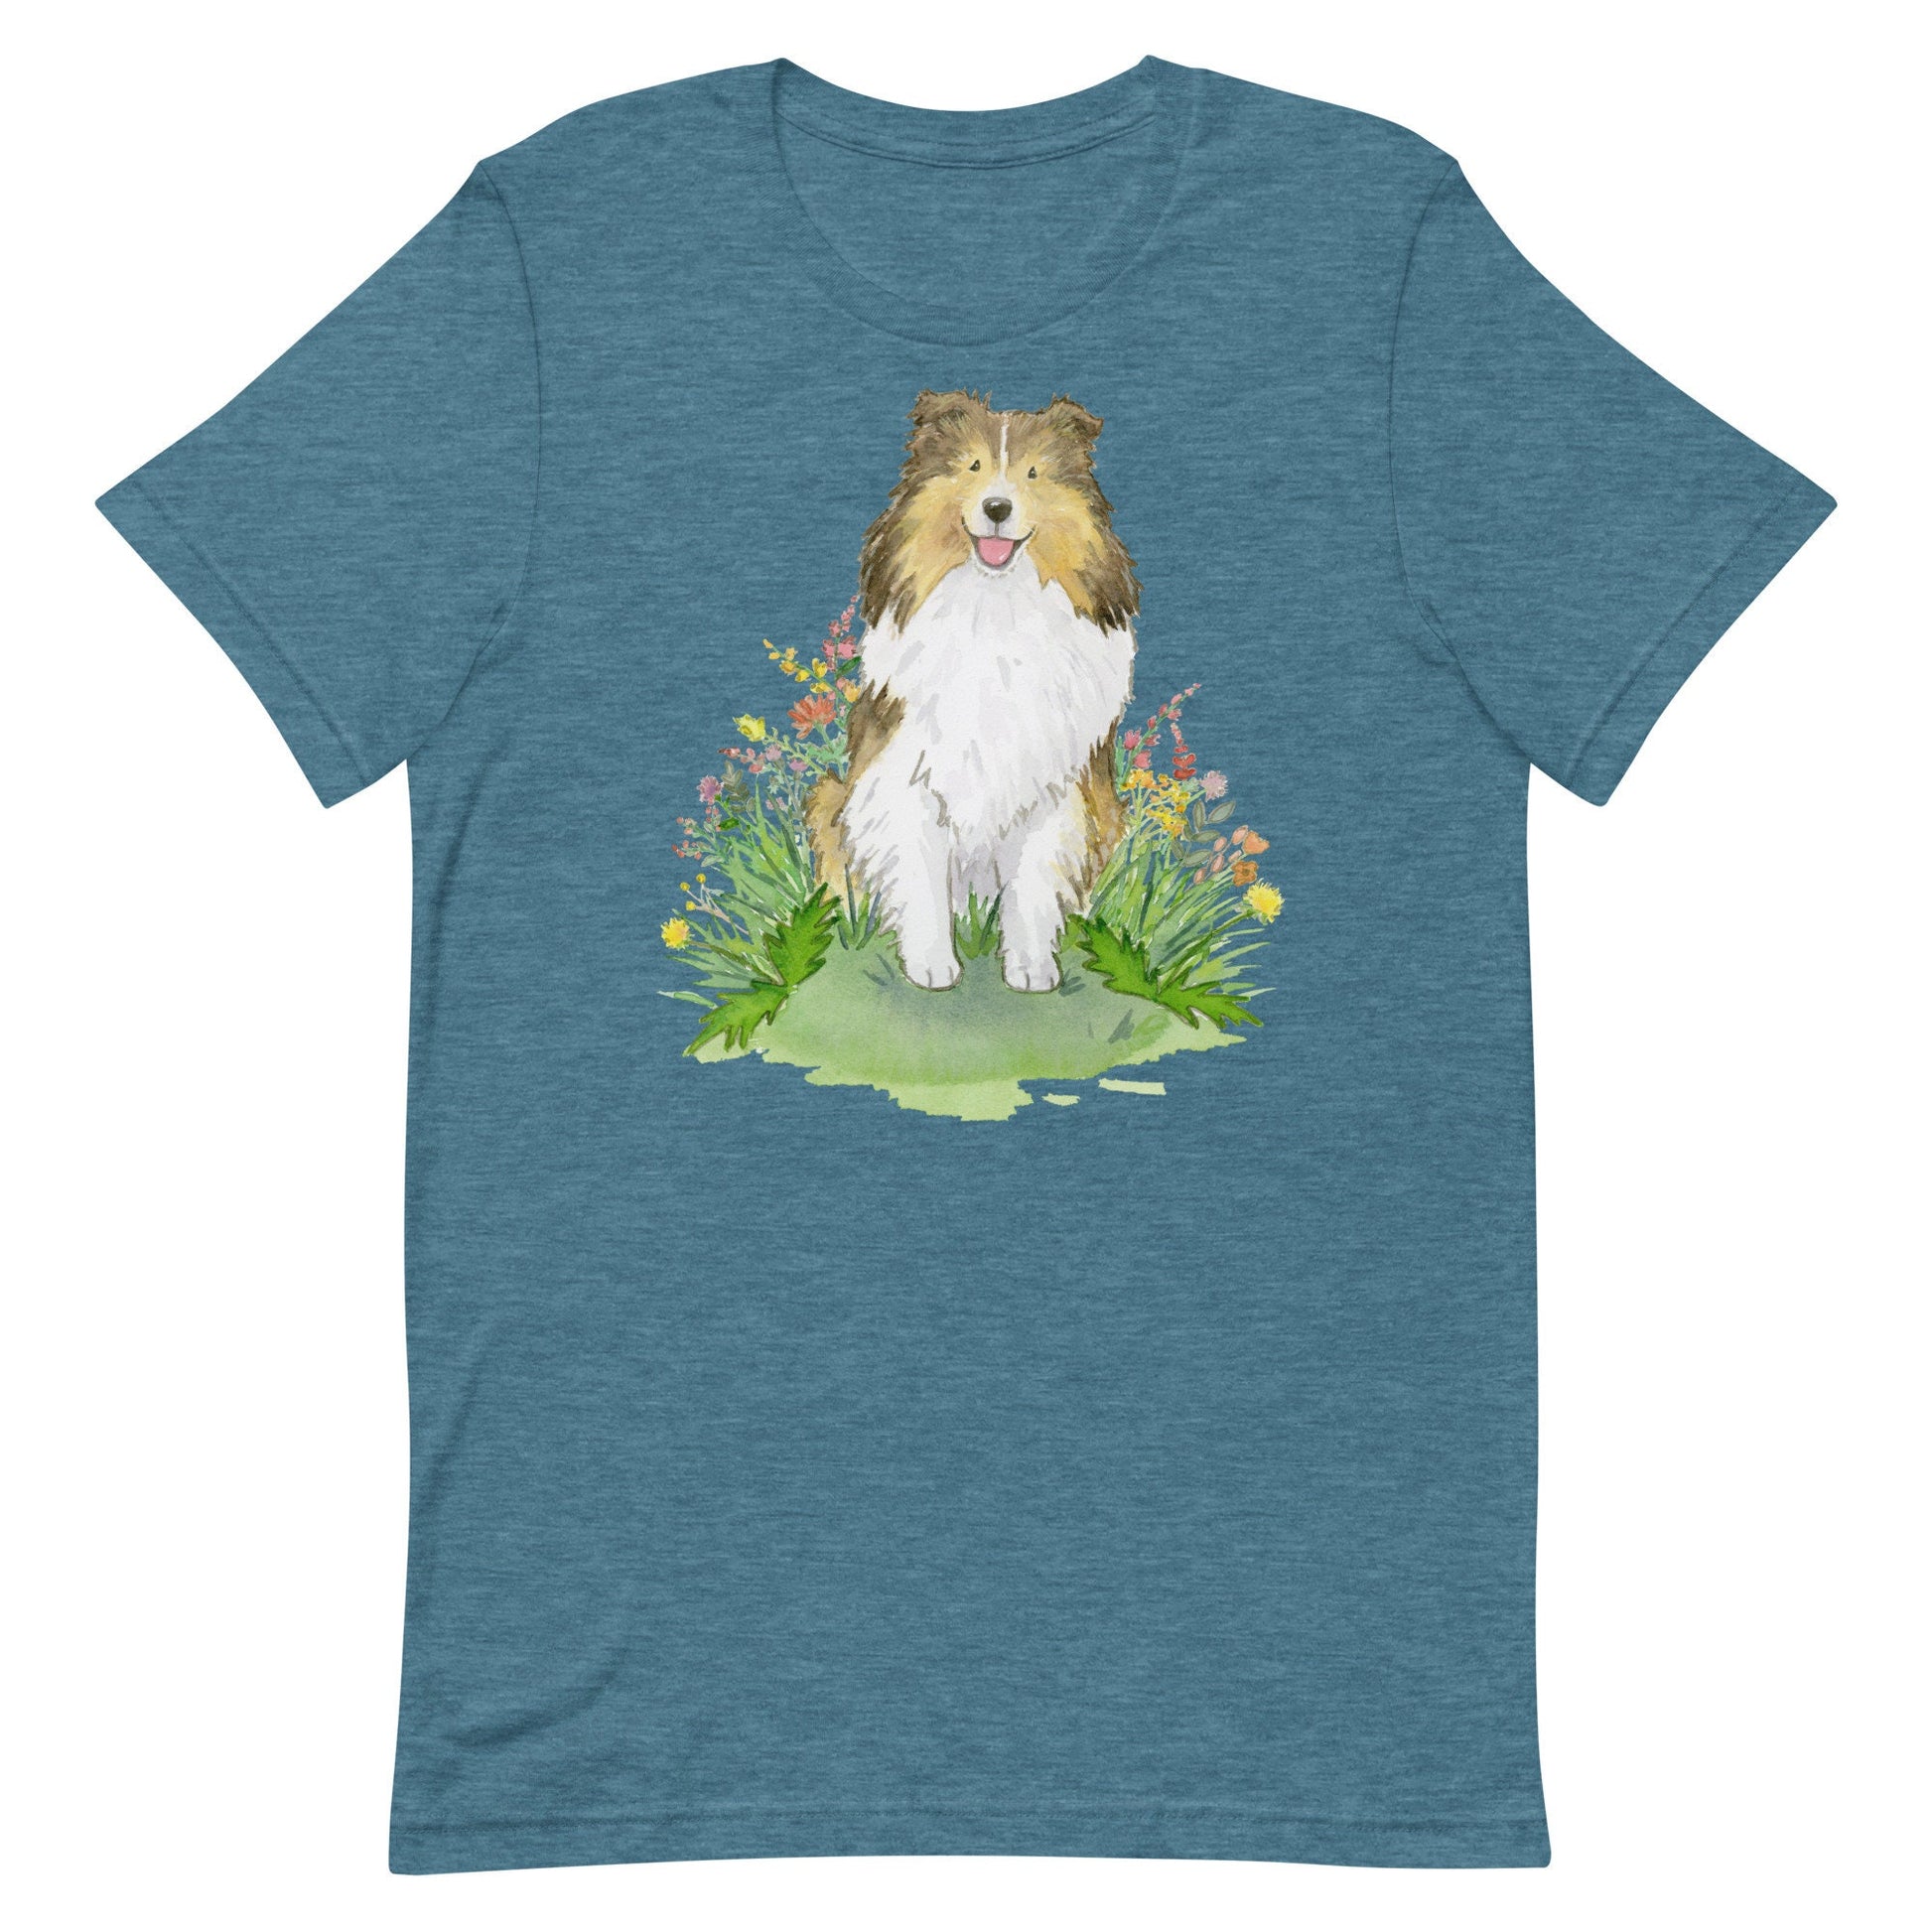 Teal t-shirt with sable shetland sheepdog artwork on it.